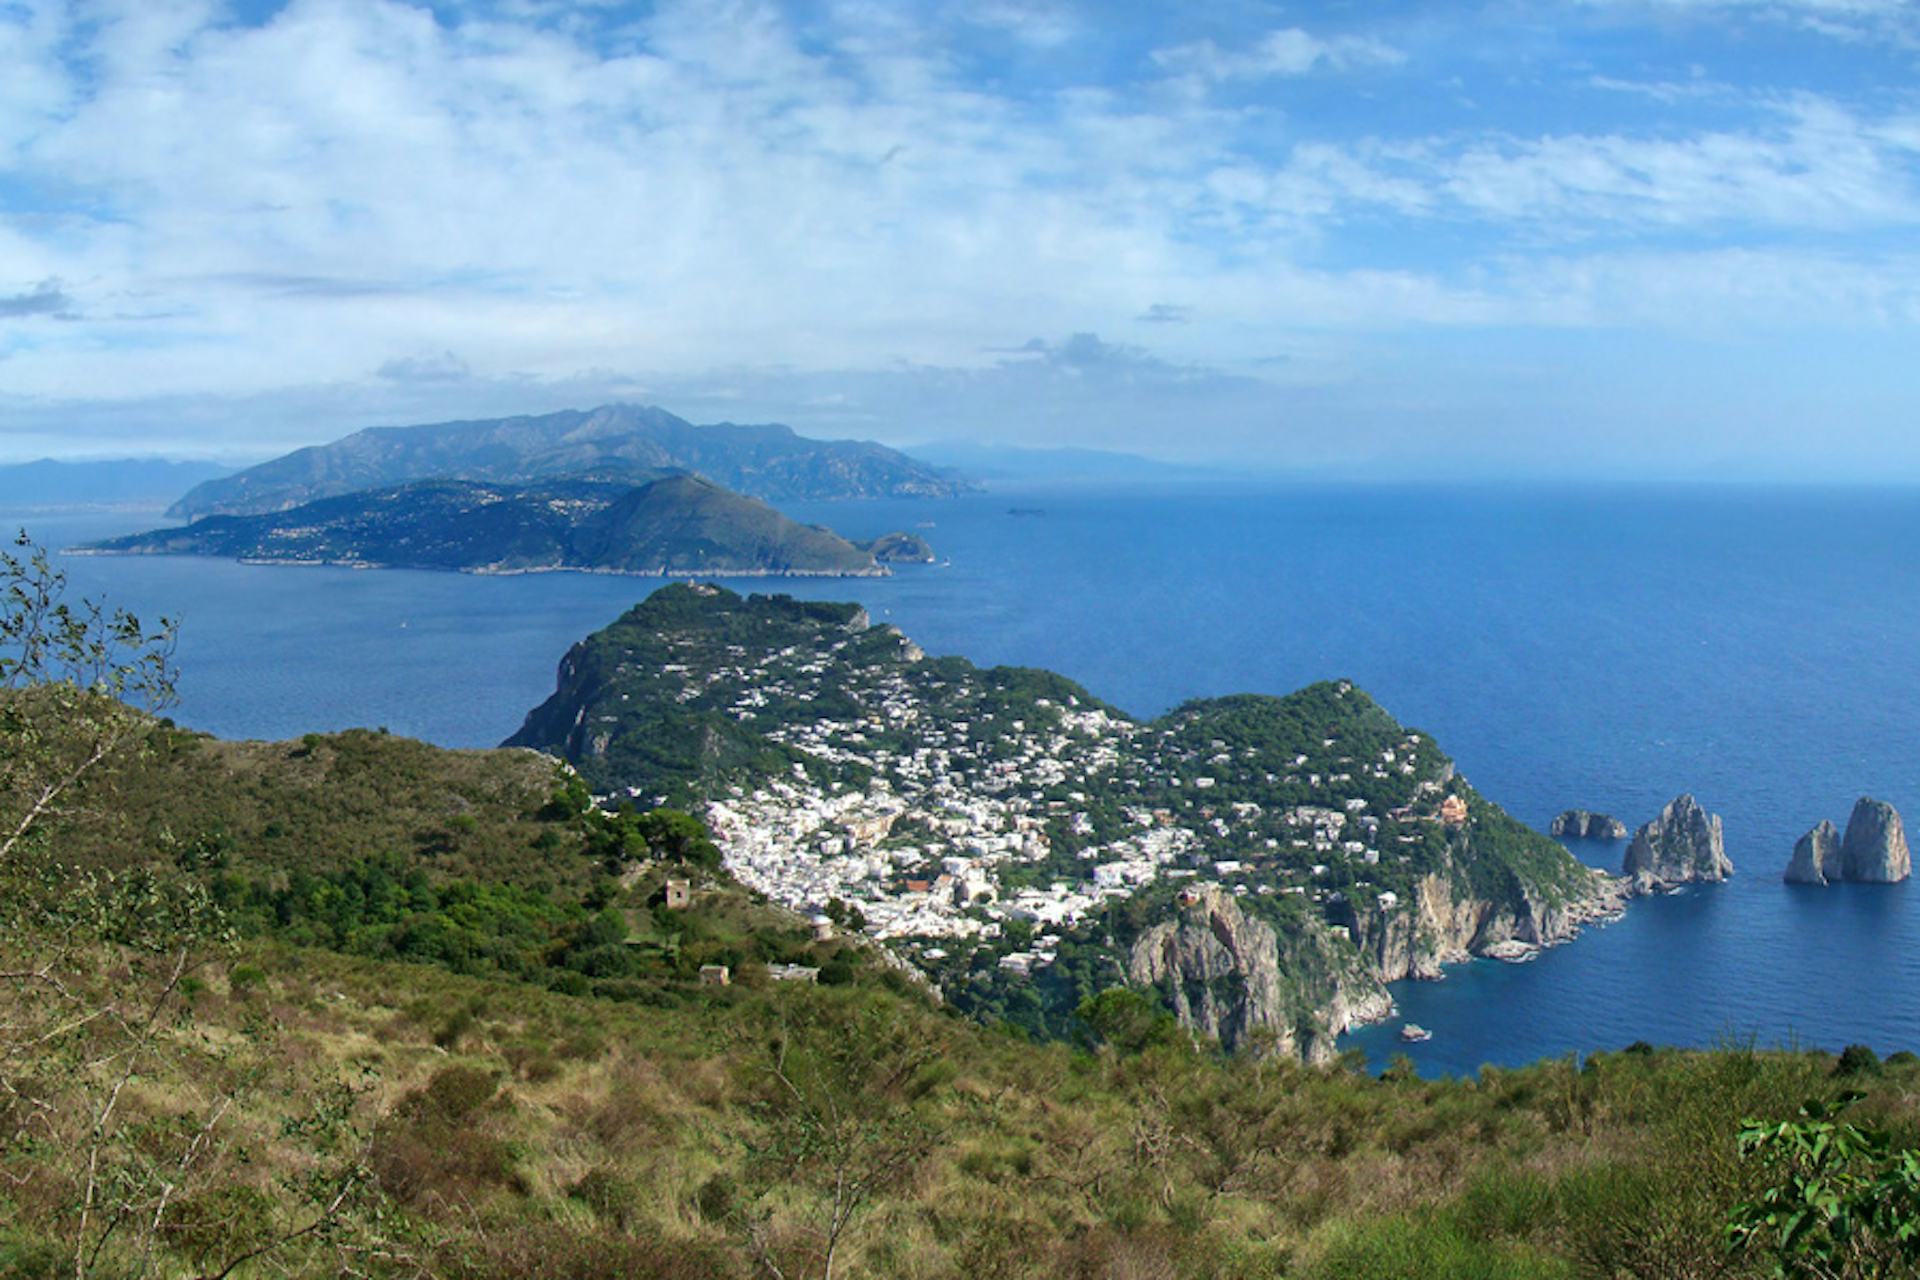 View of Campania and Cape Sorrento from Capri